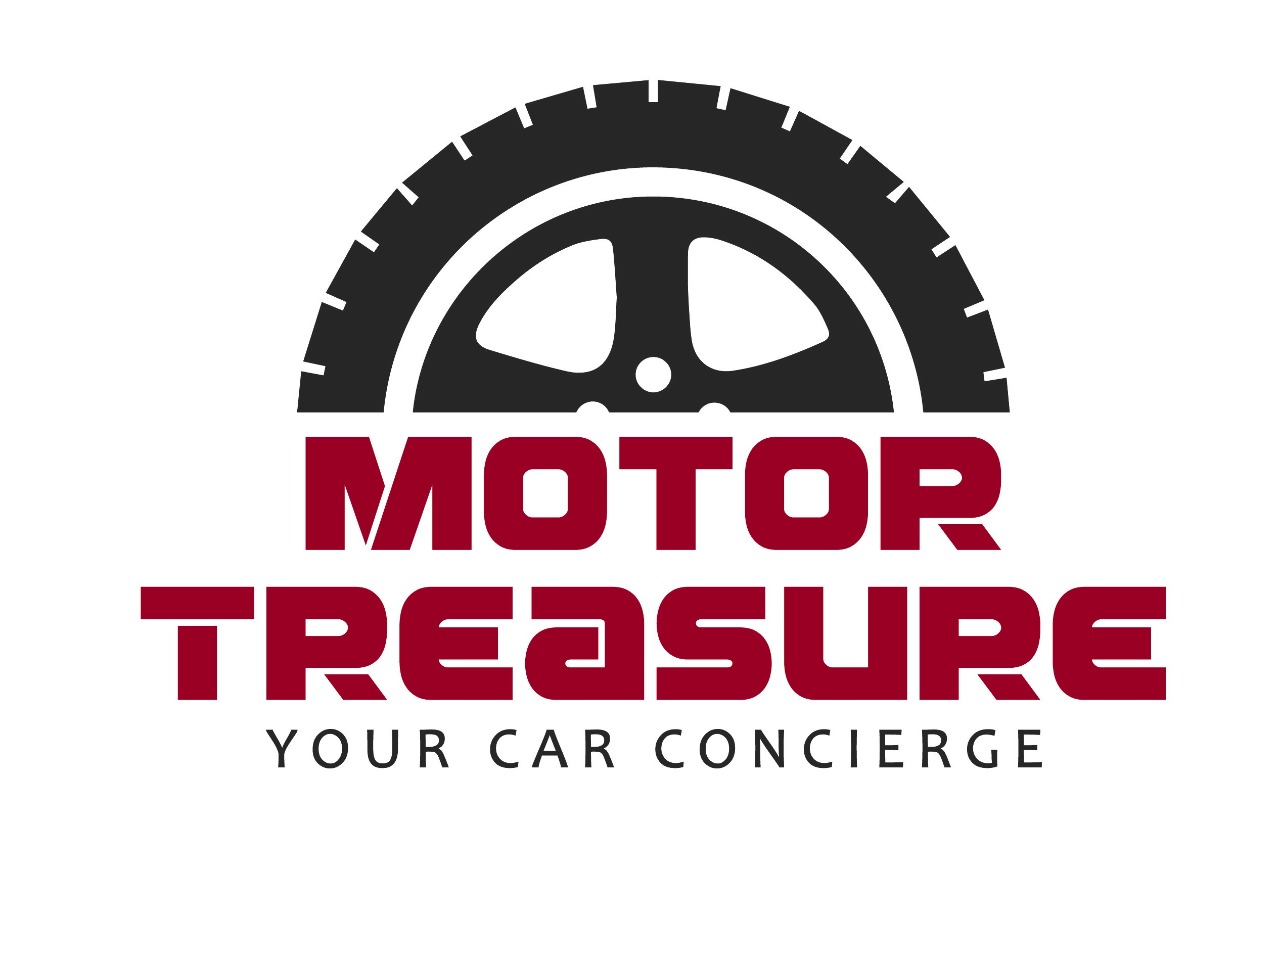 About Motor Treasure In Bridgeton Nj